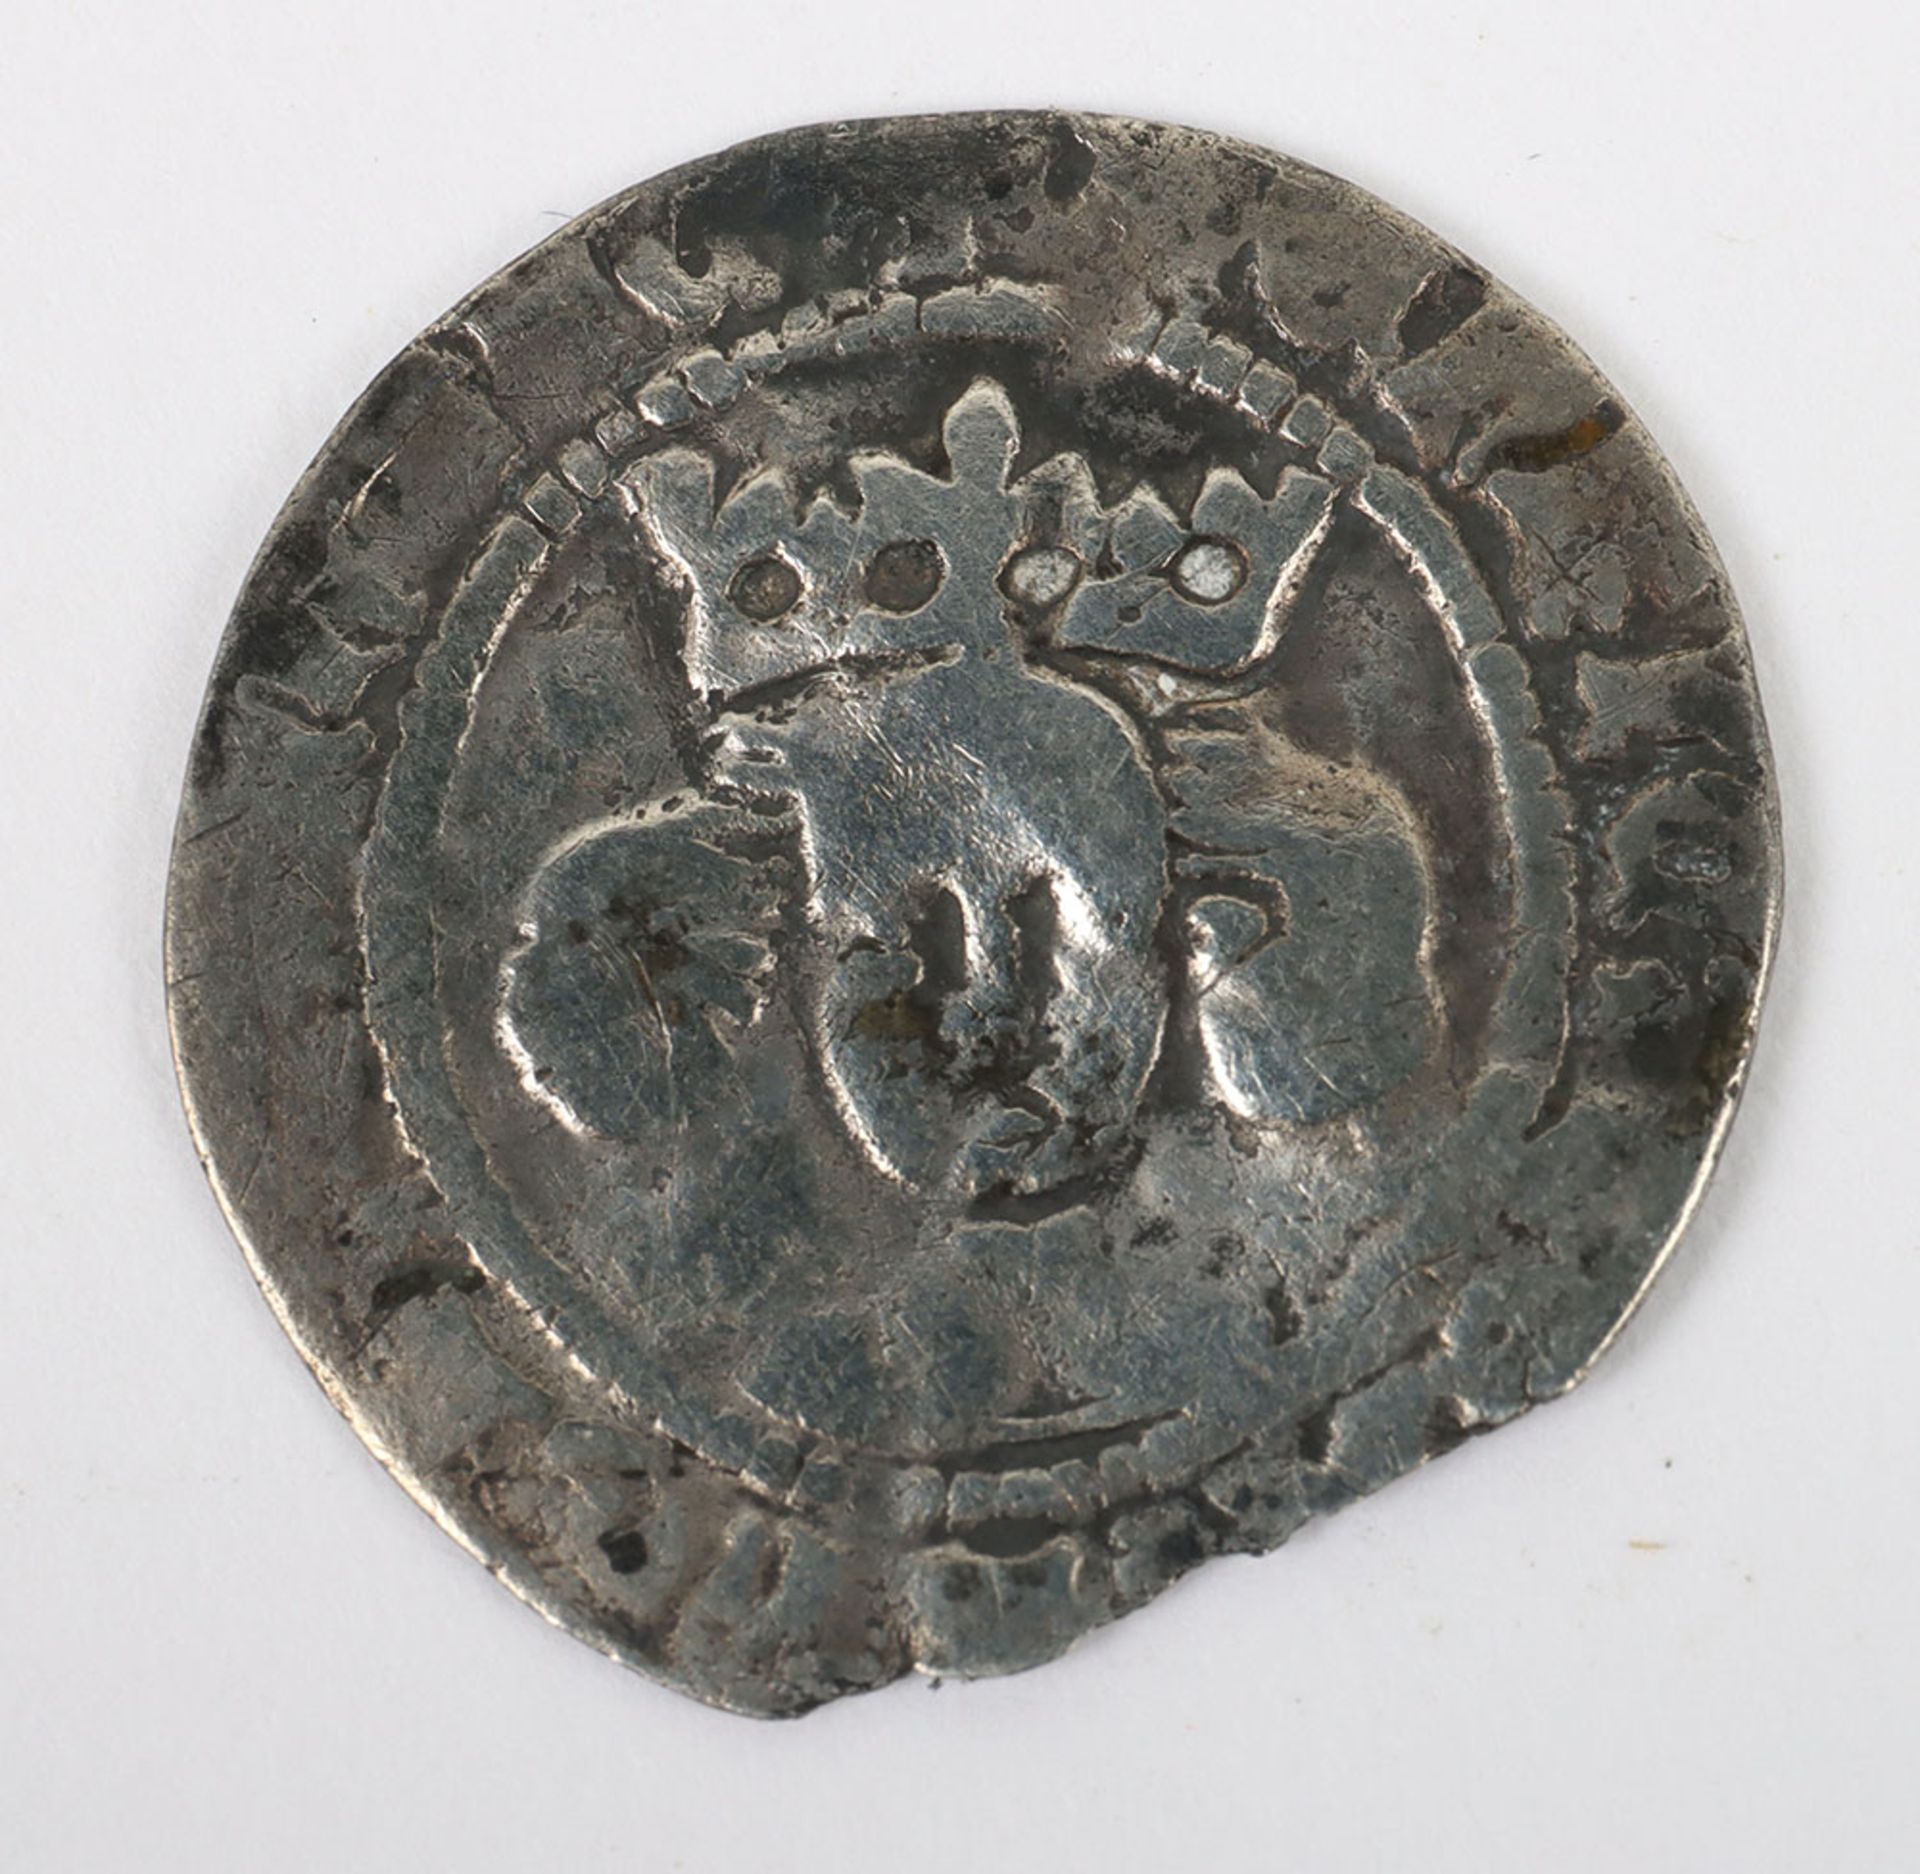 Henry IV (1399-1413), Penny, Heavy Coinage 1399-1412)